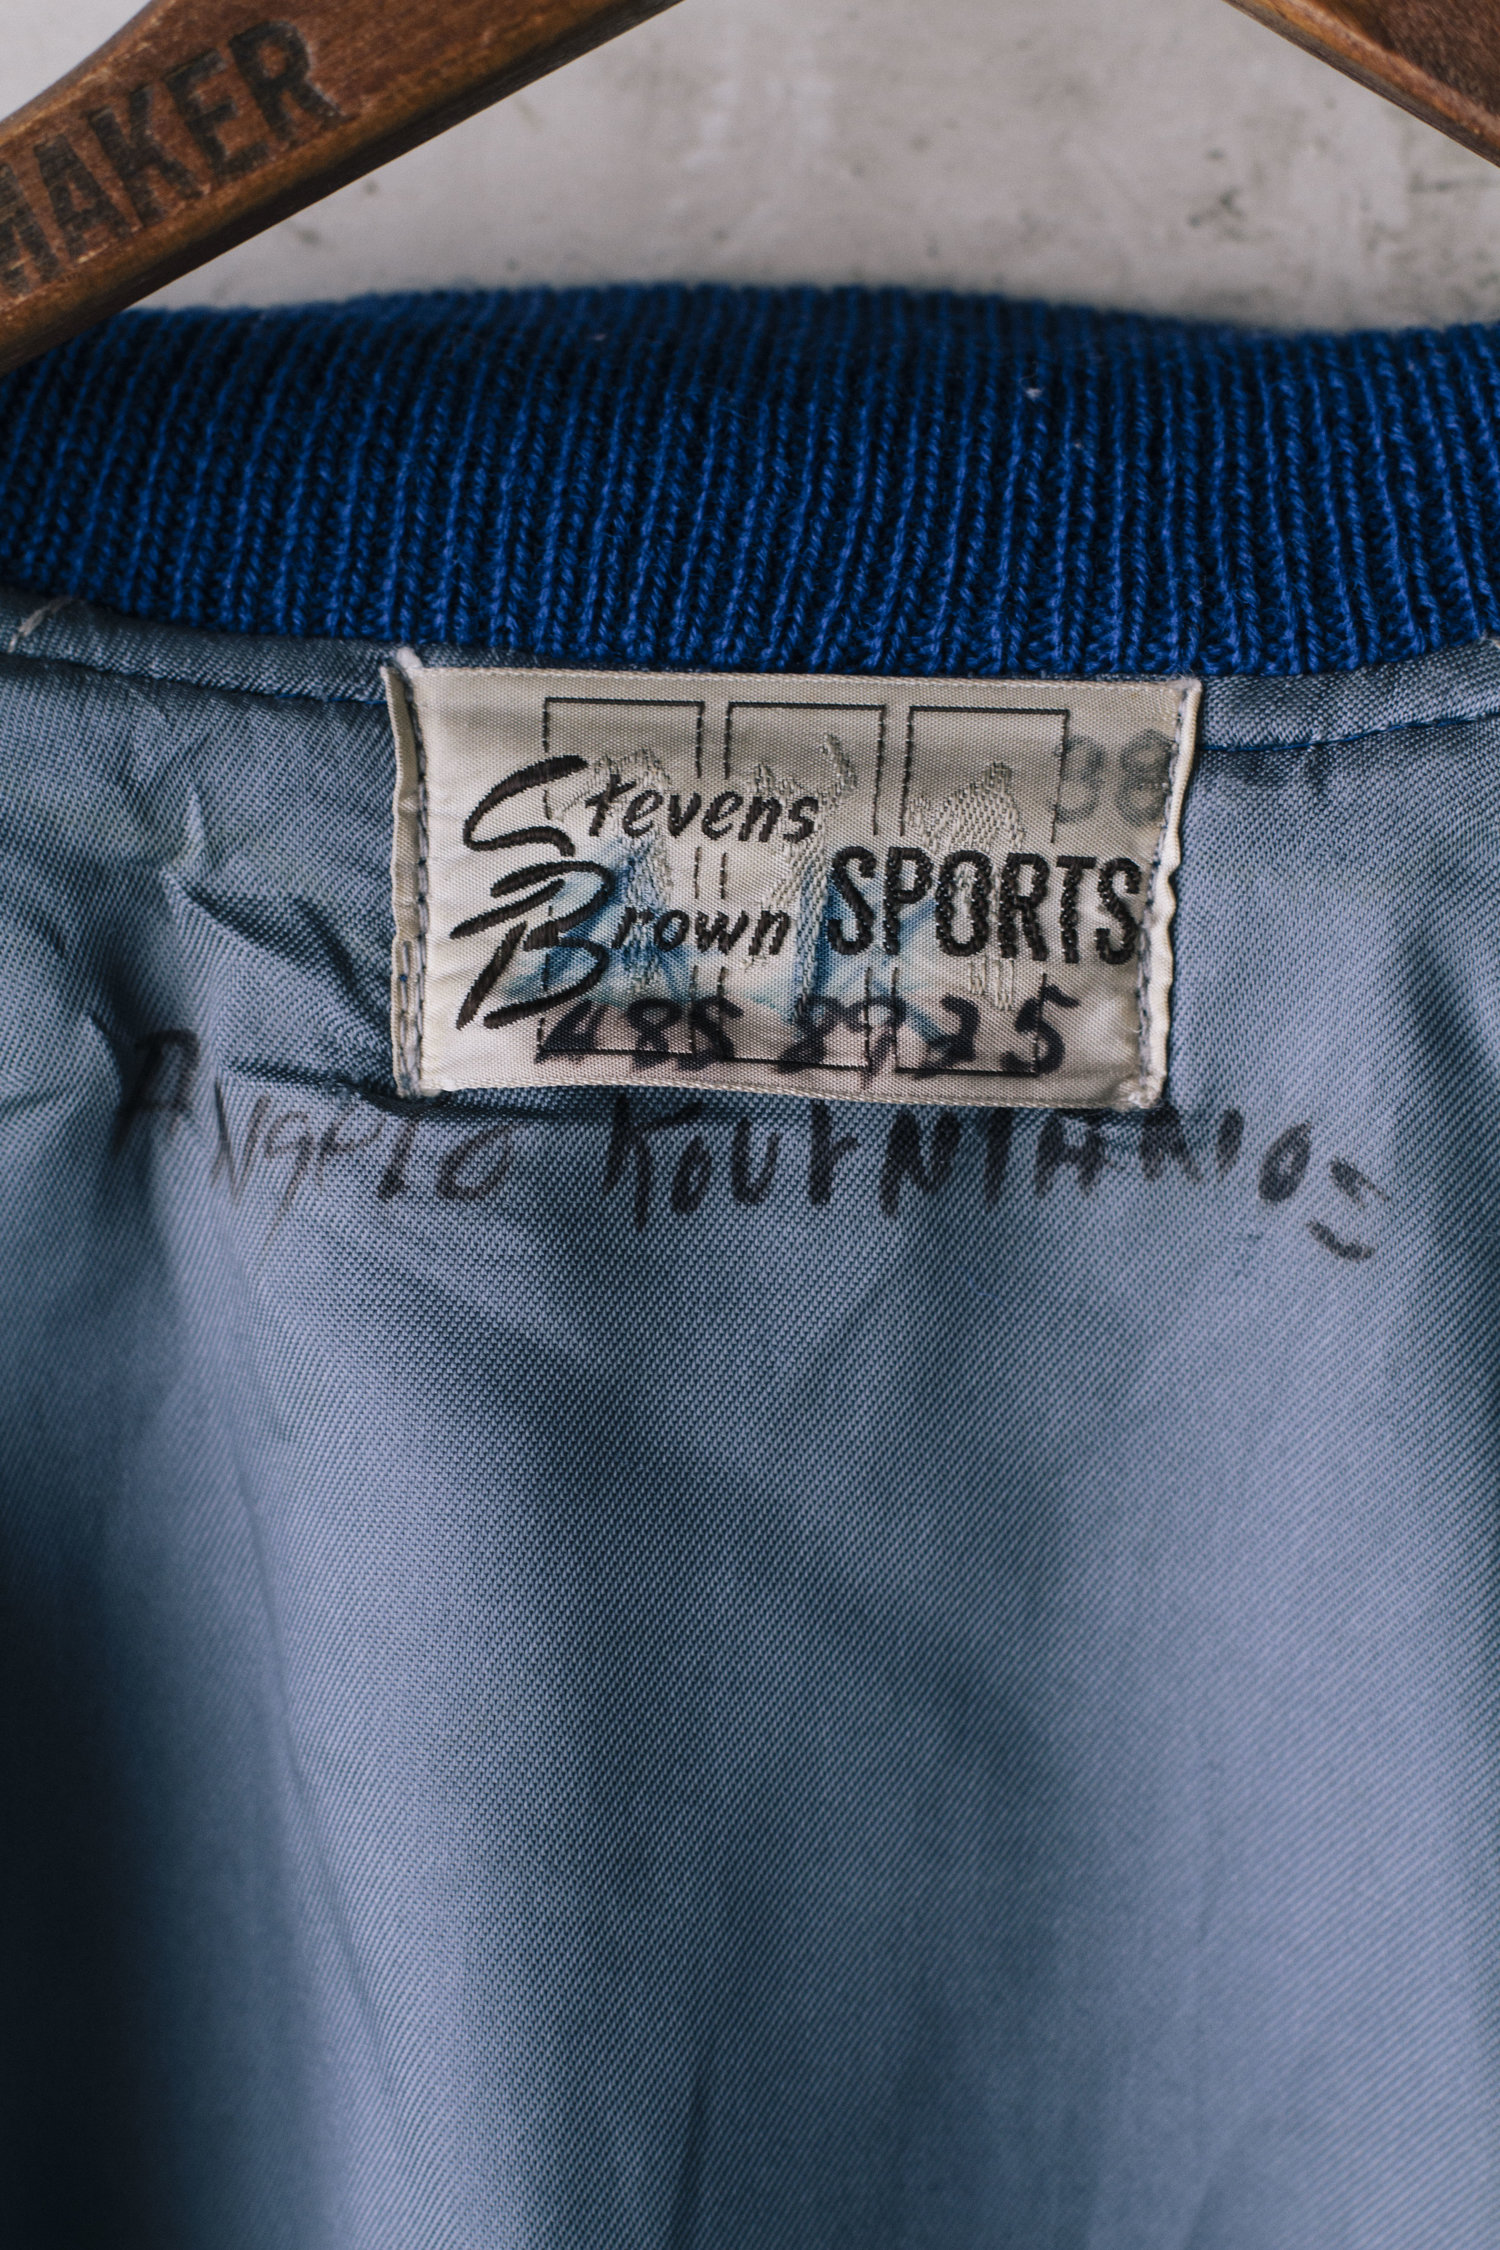 vintage sports  jacket 50s 60s